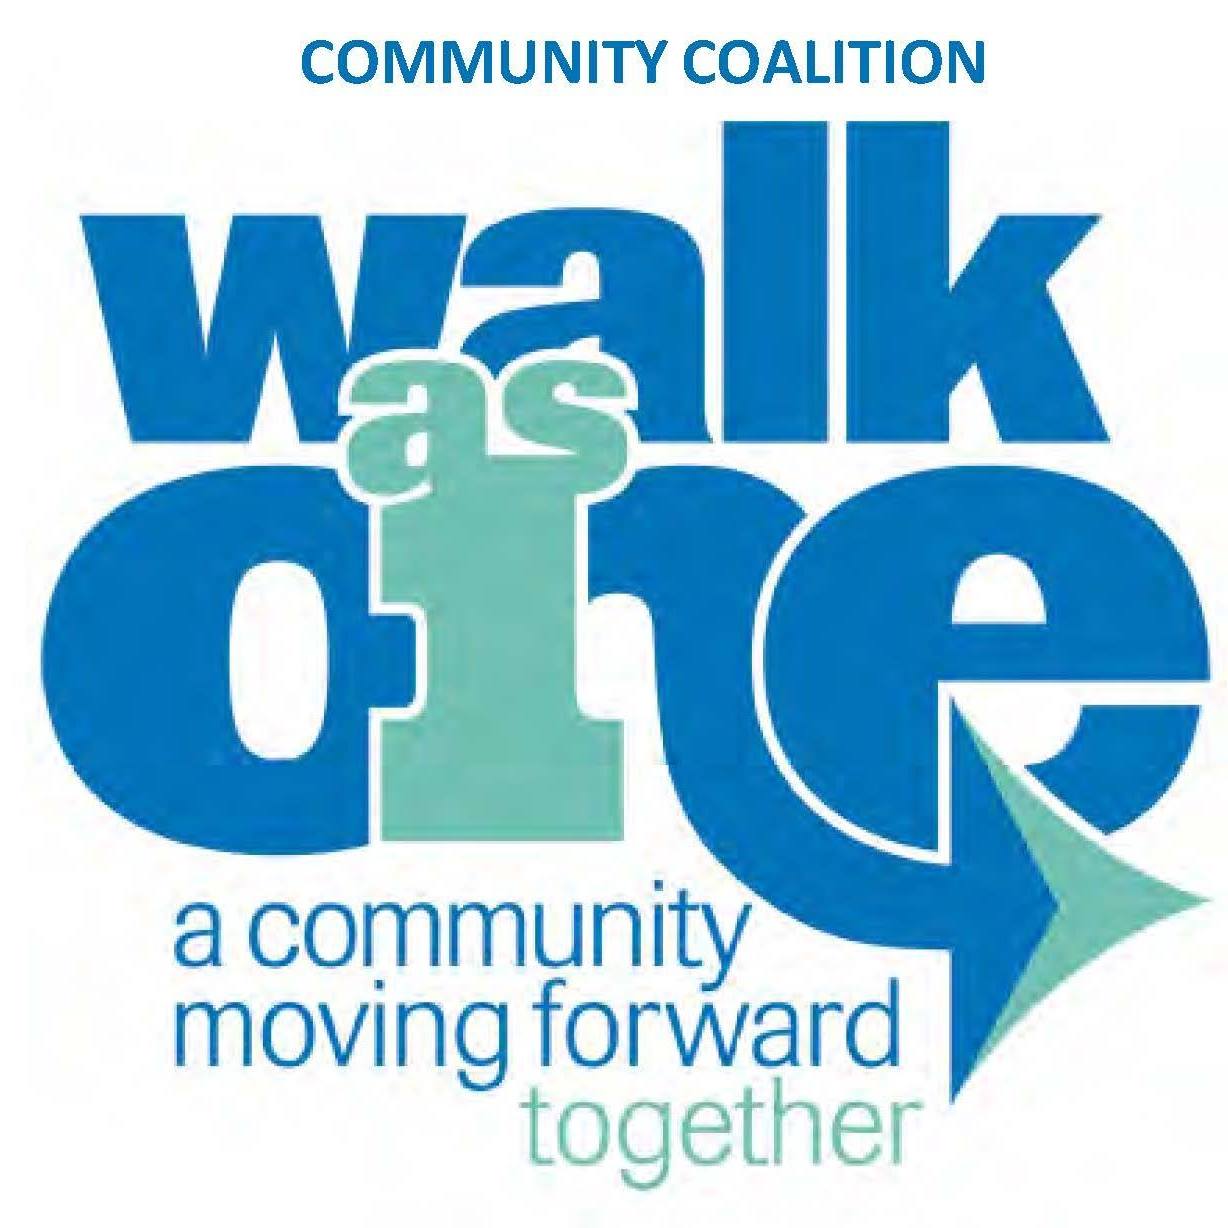 Community Coalition Walk as One a community moving forward together logo